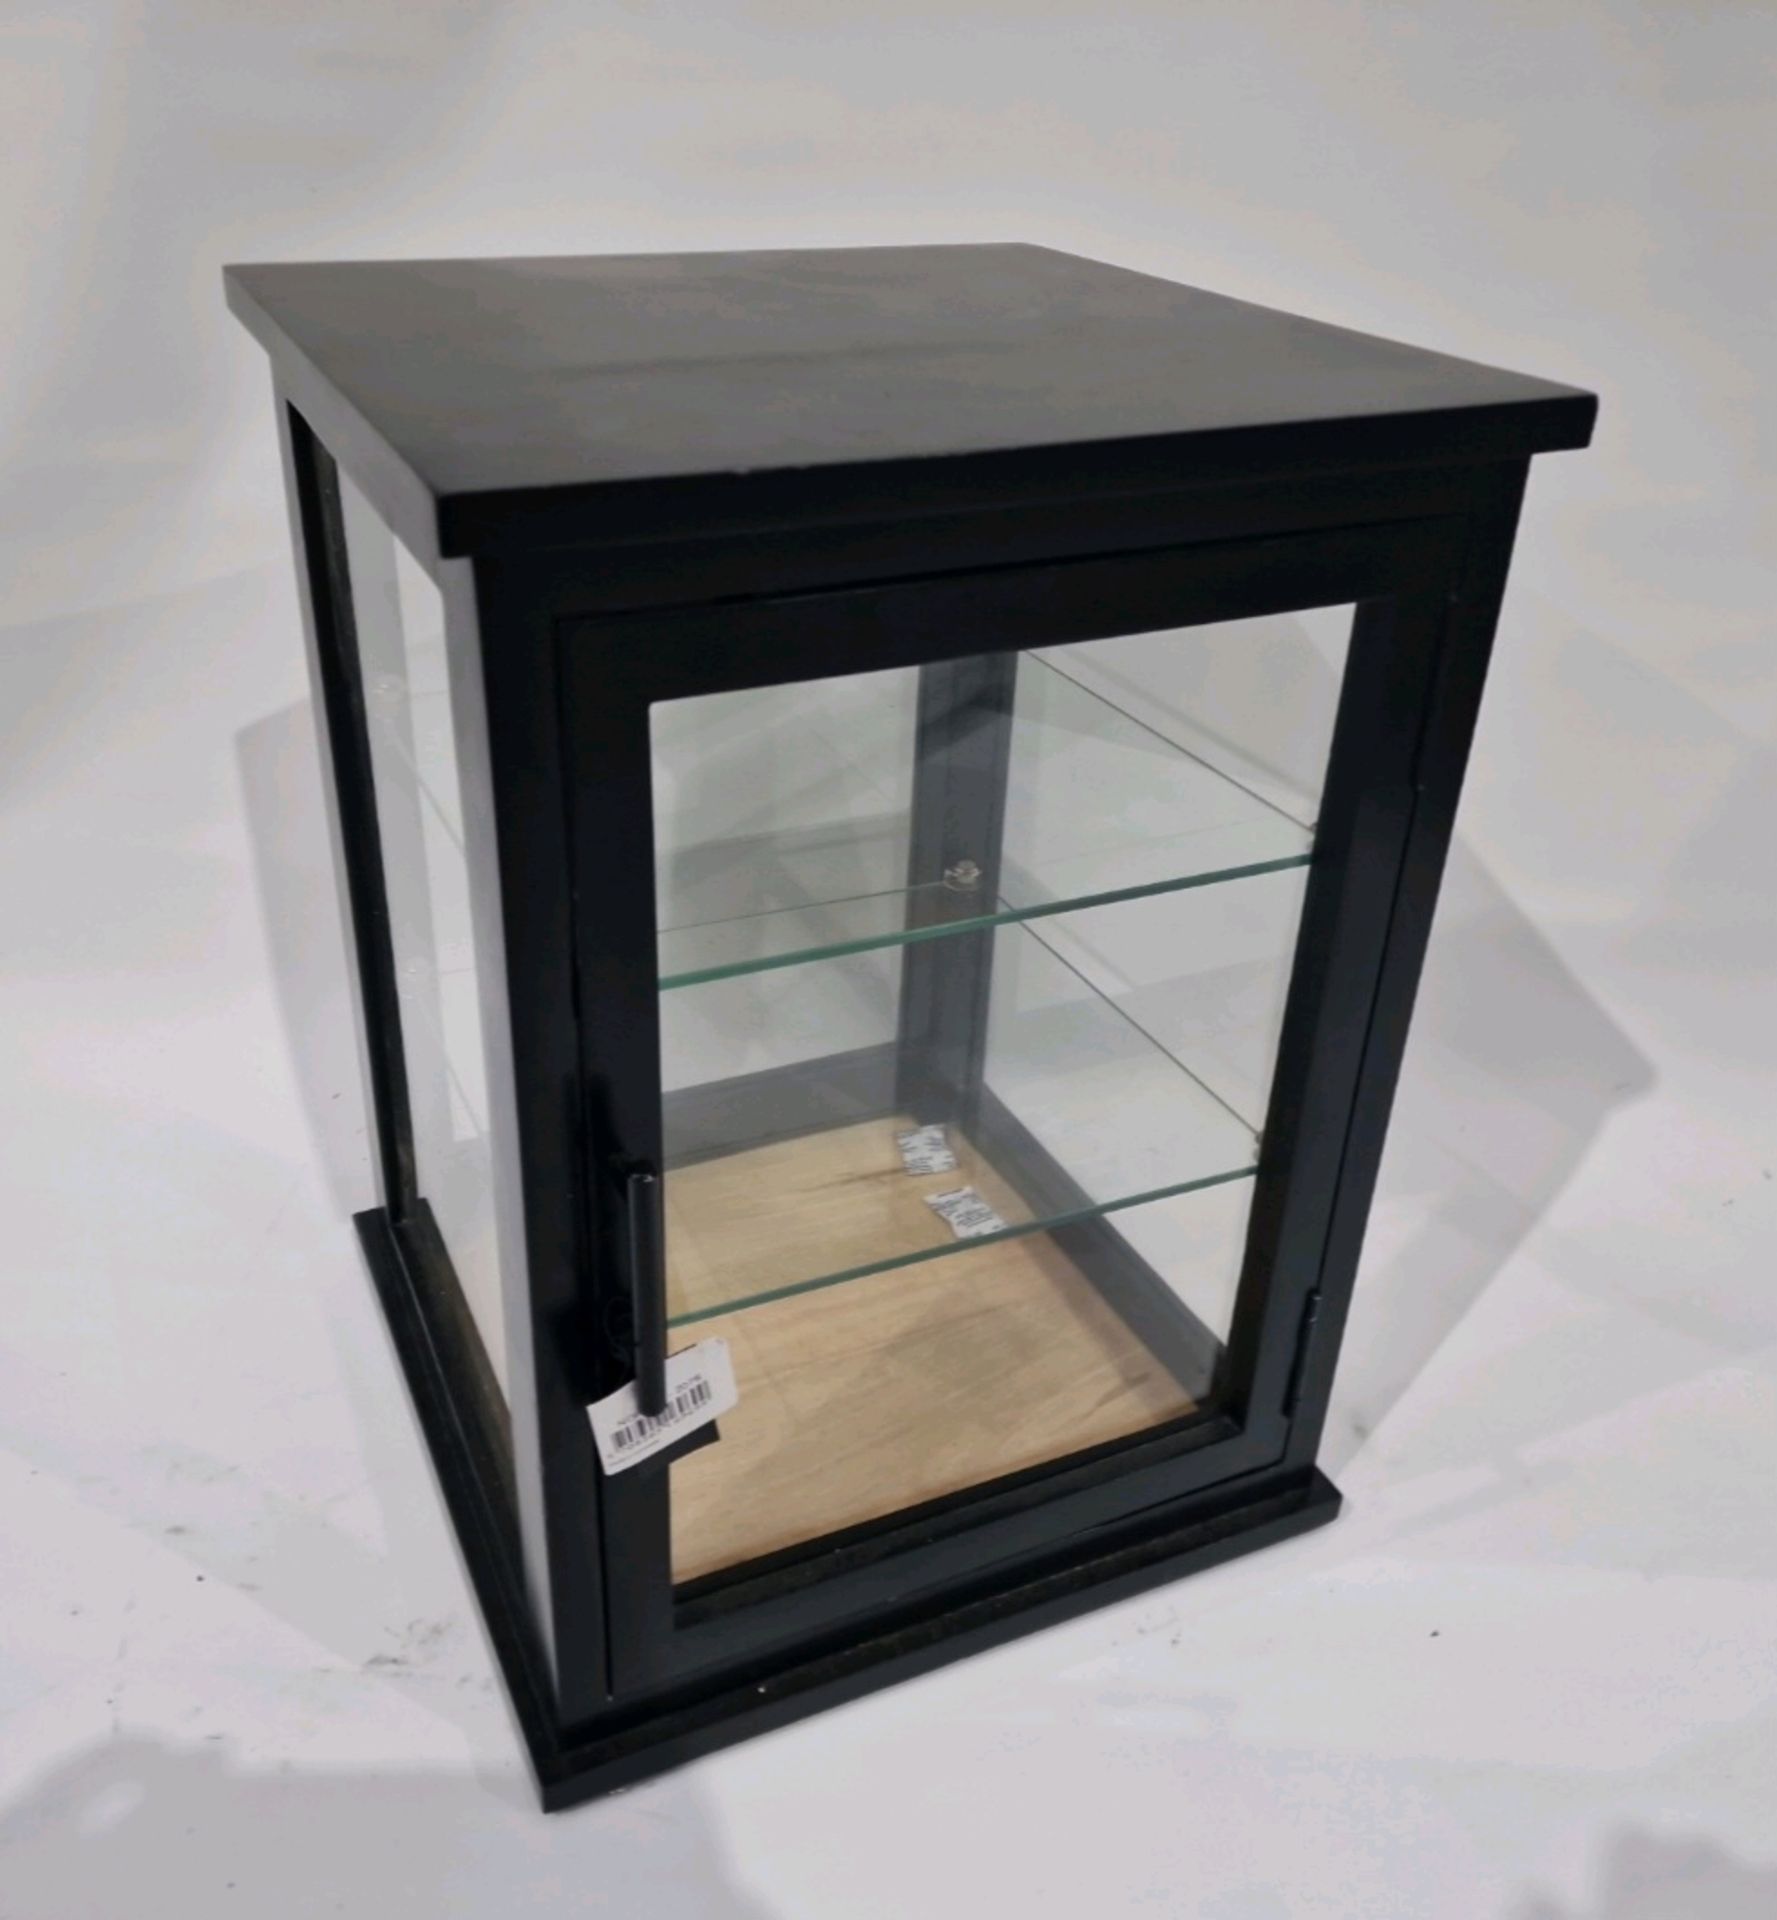 Vitrine ARNO Black Wood Nordal Display Cabinet - Image 2 of 3